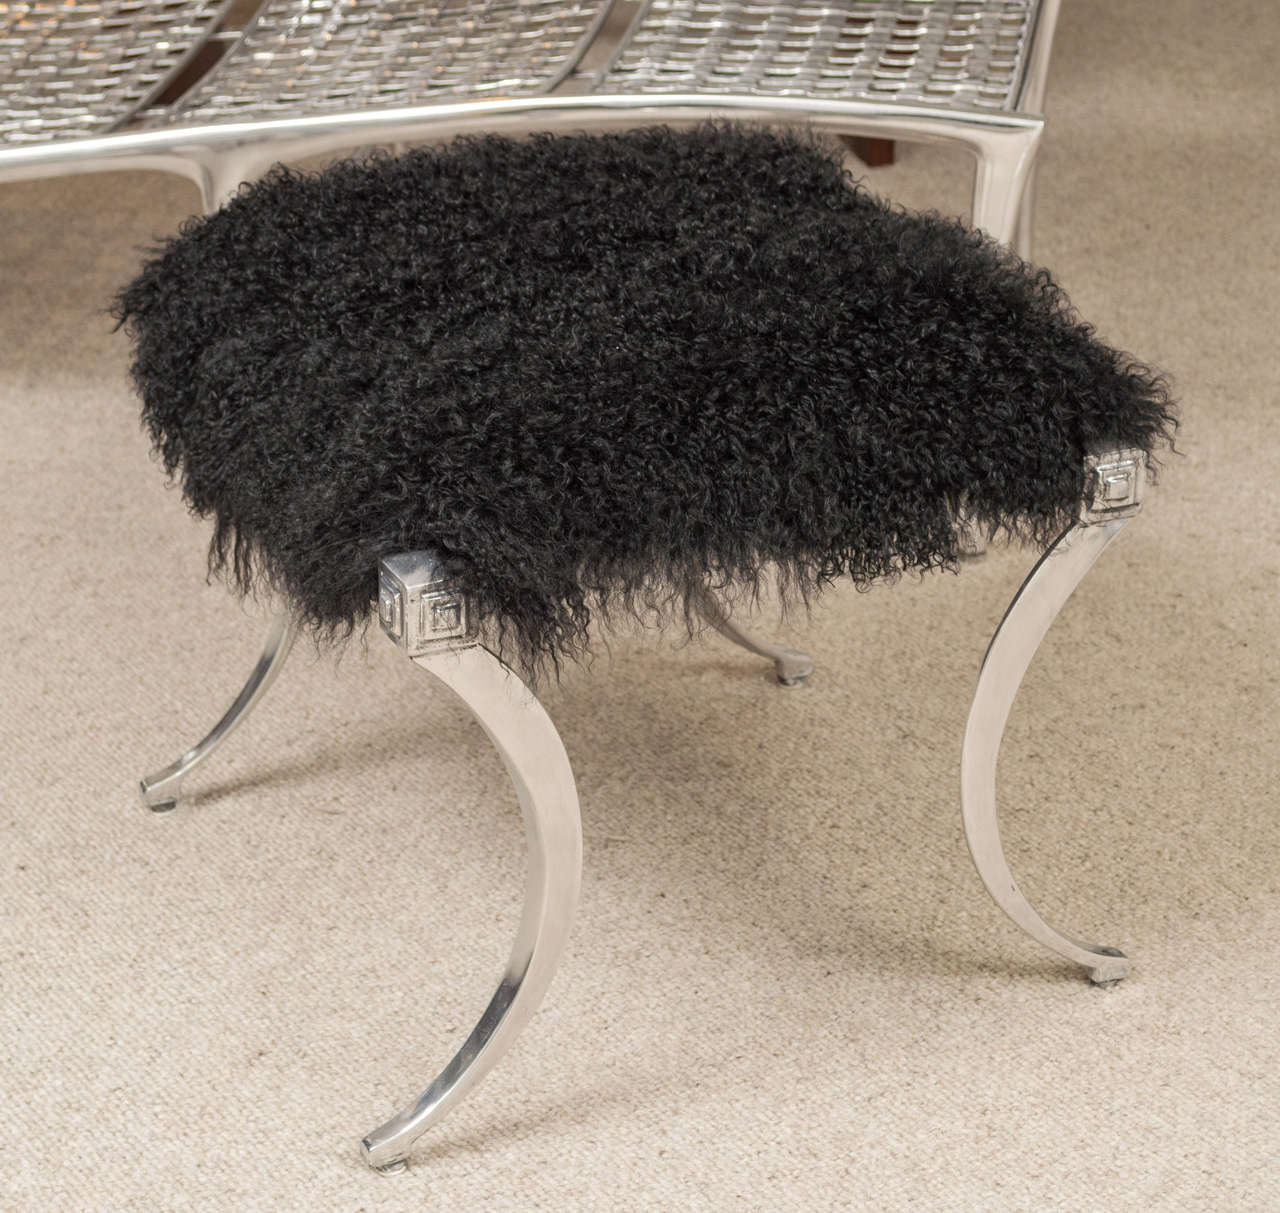 Polished  Kilsmos stool with a black Mongolian seat.